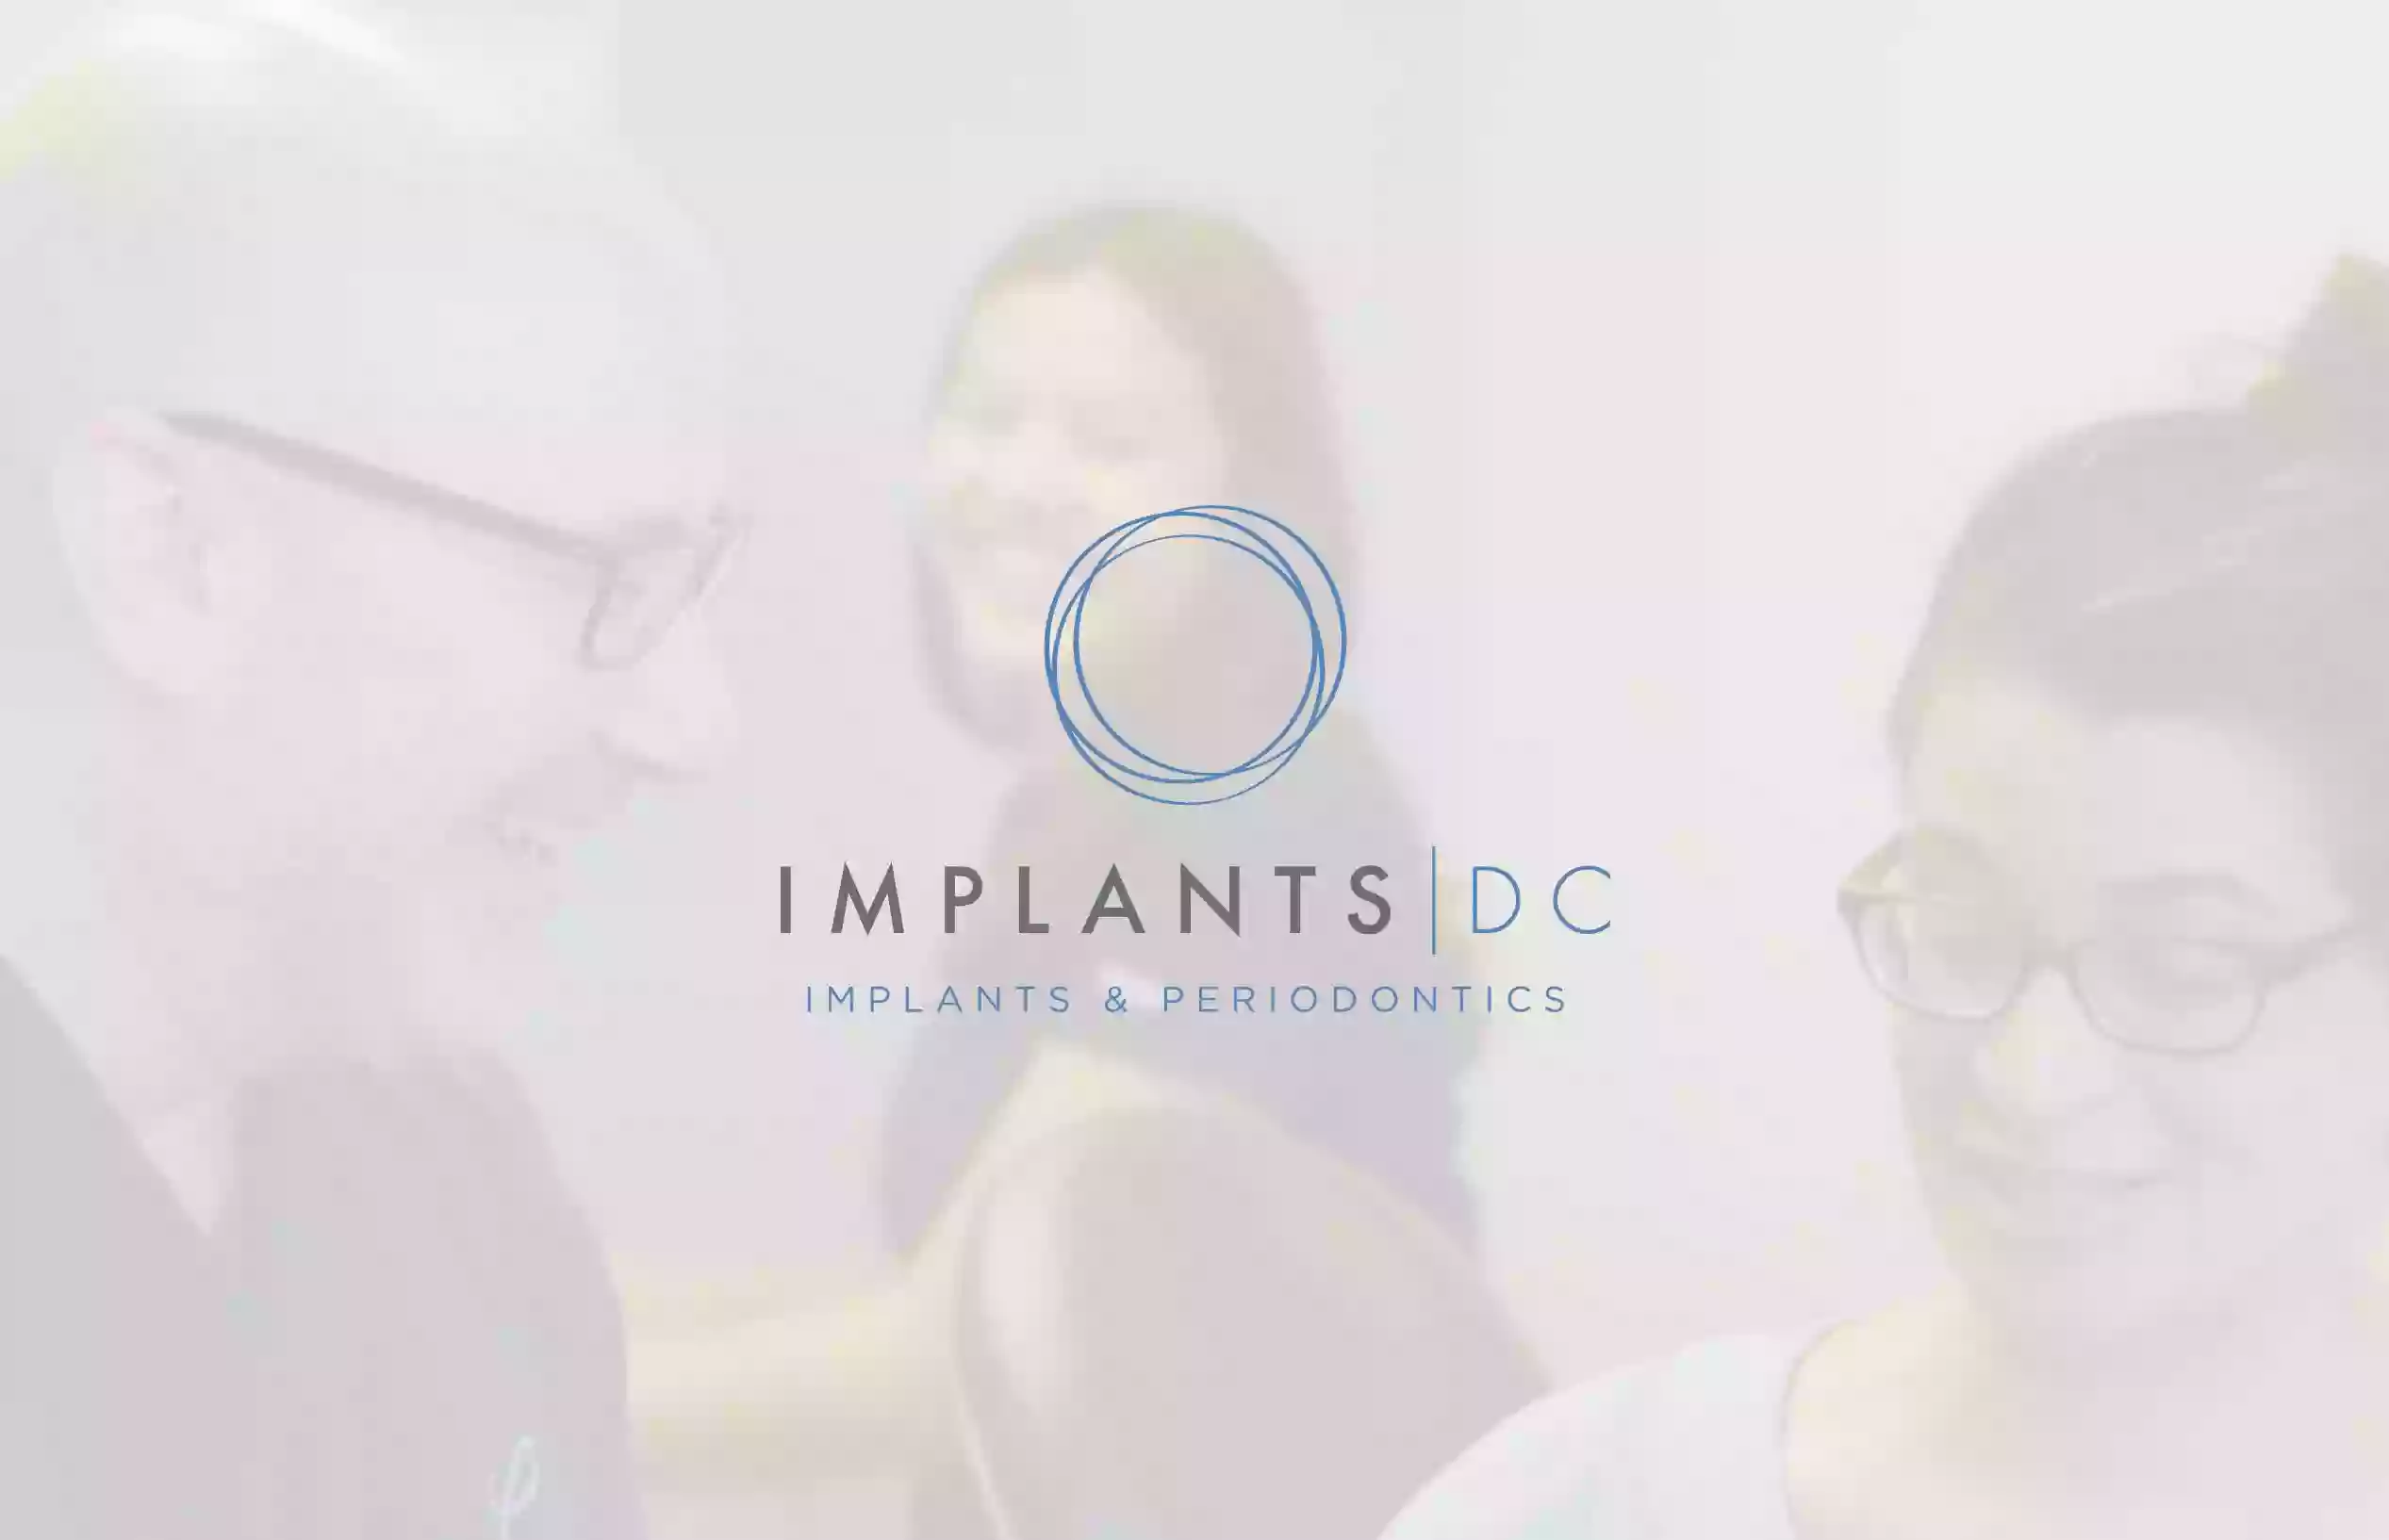 ImplantsDC: Dr. Israel Puterman and Dr. Chris Barth